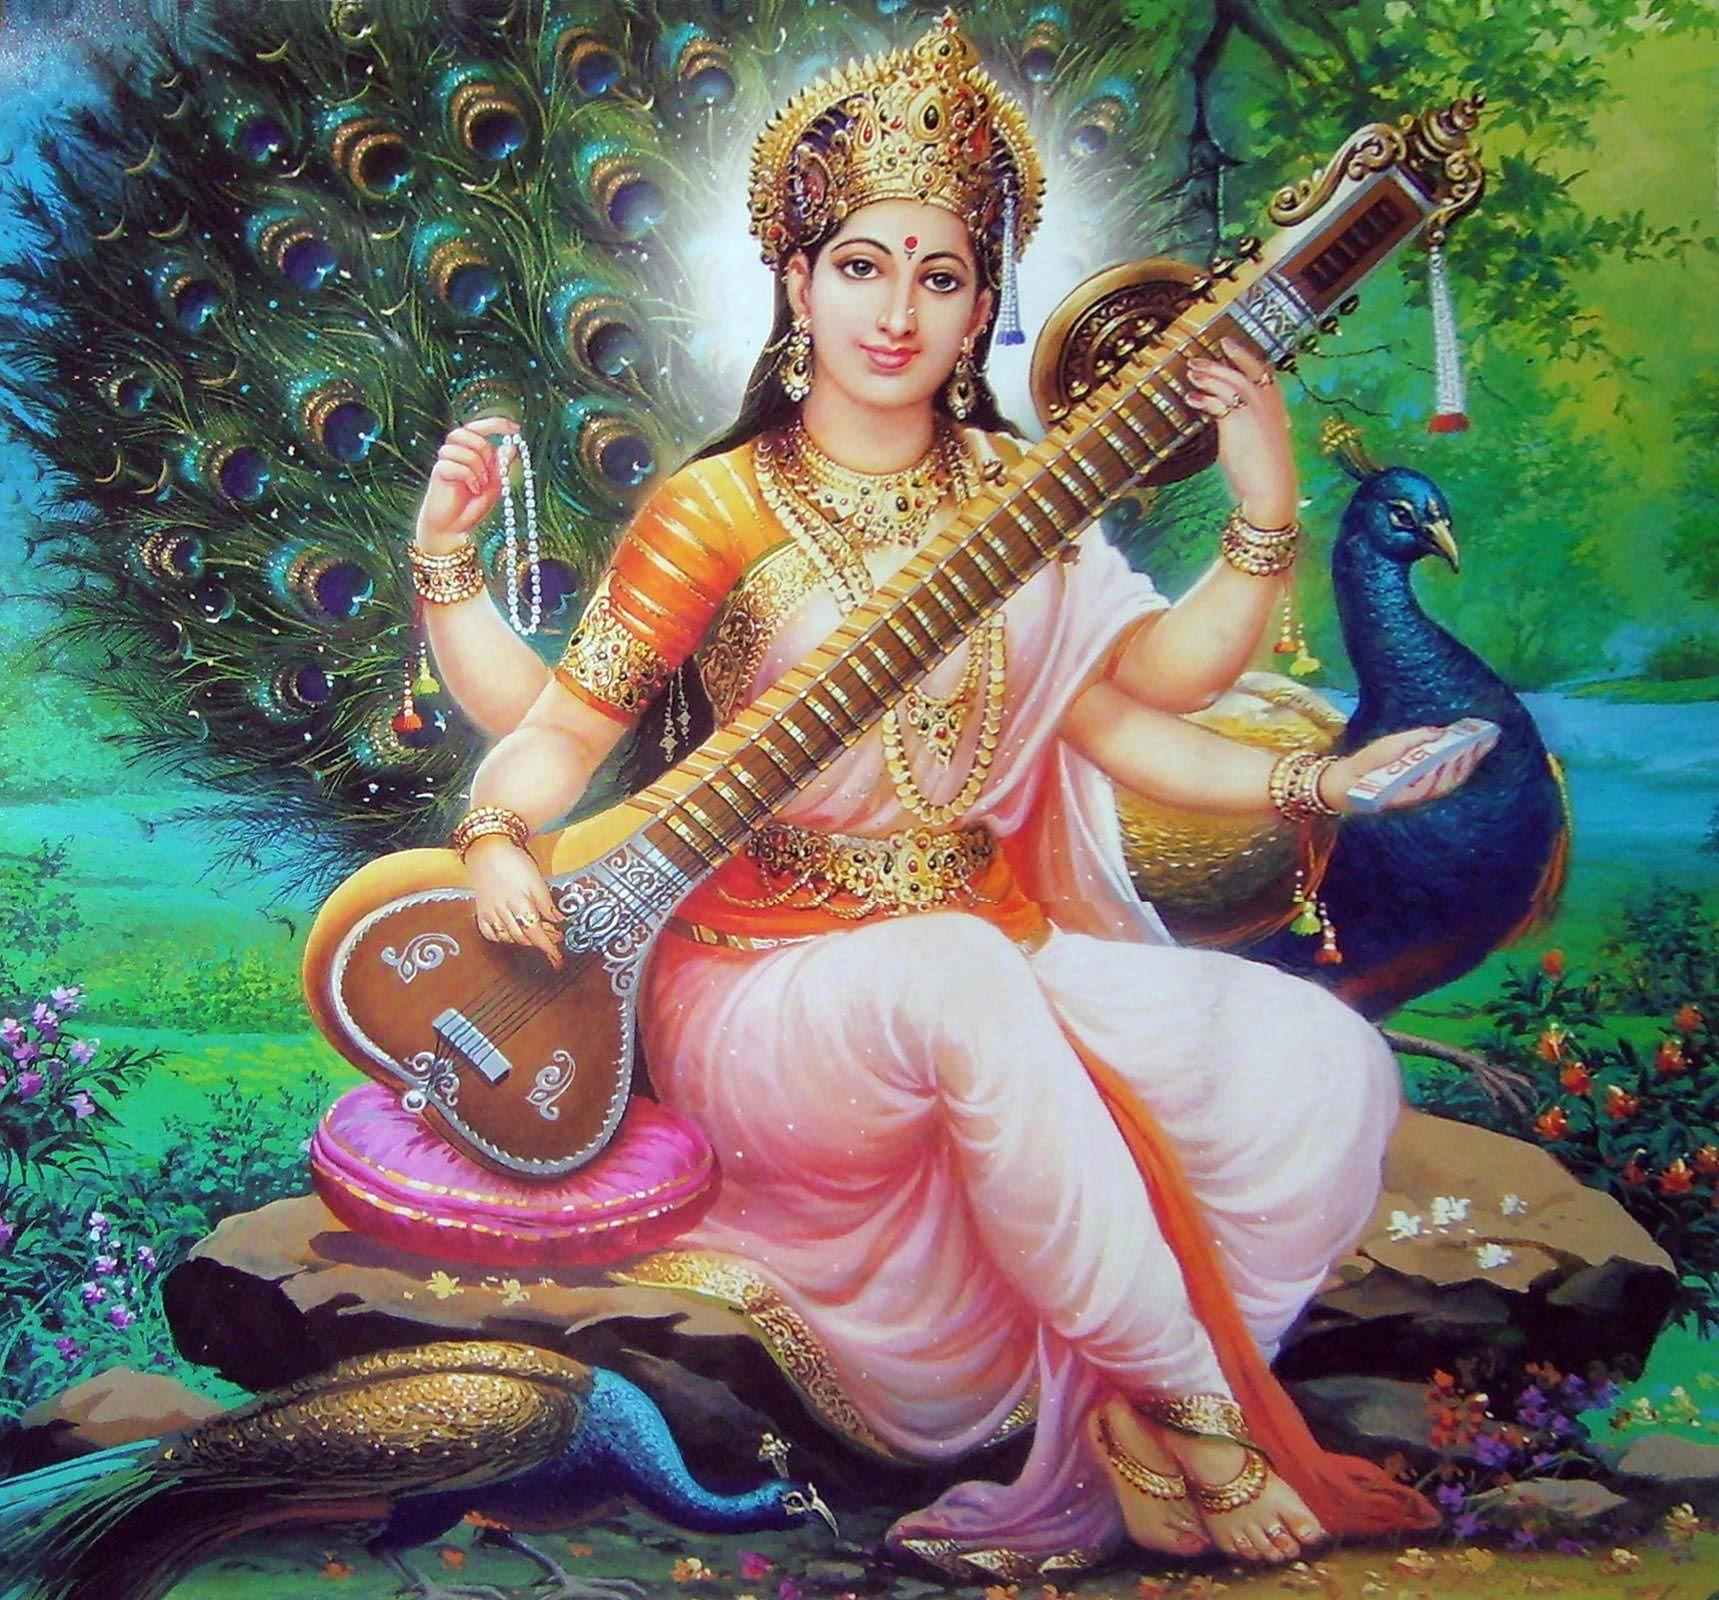 Saraswati (Sanskrit: सरस्वती, Sarasvatī) is the hindu